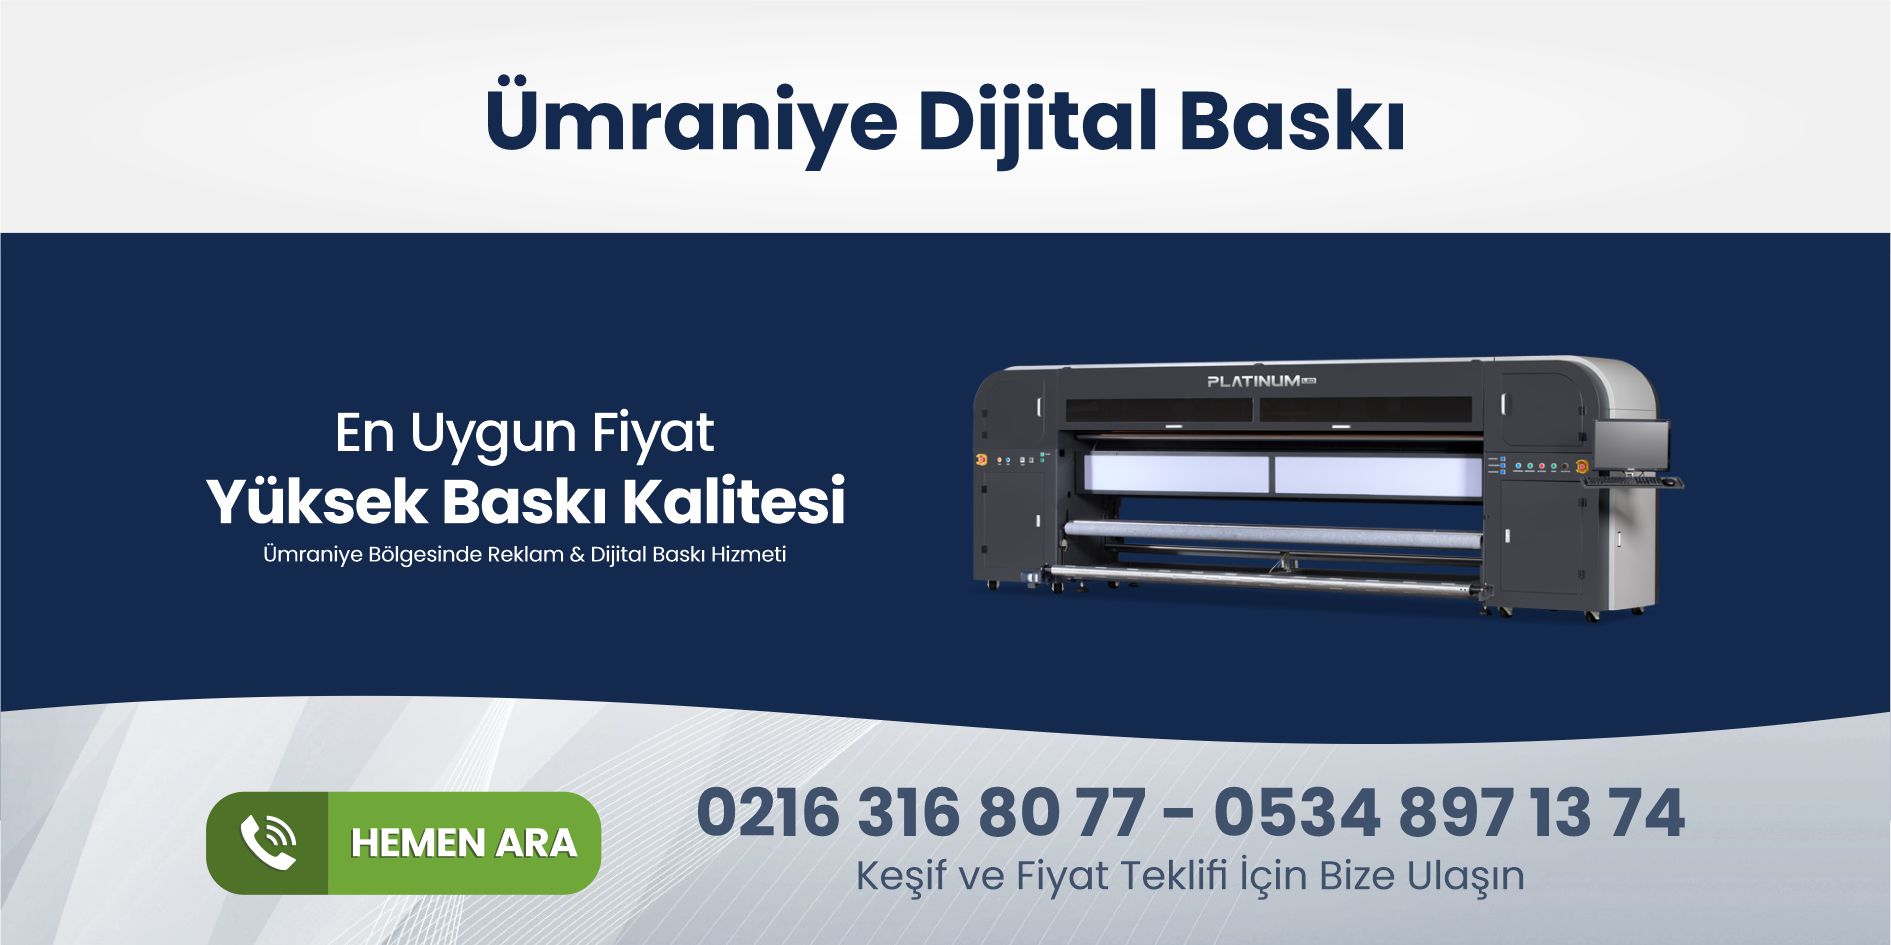 You are currently viewing Mithatpaşa Caddesi Dijital Baskı